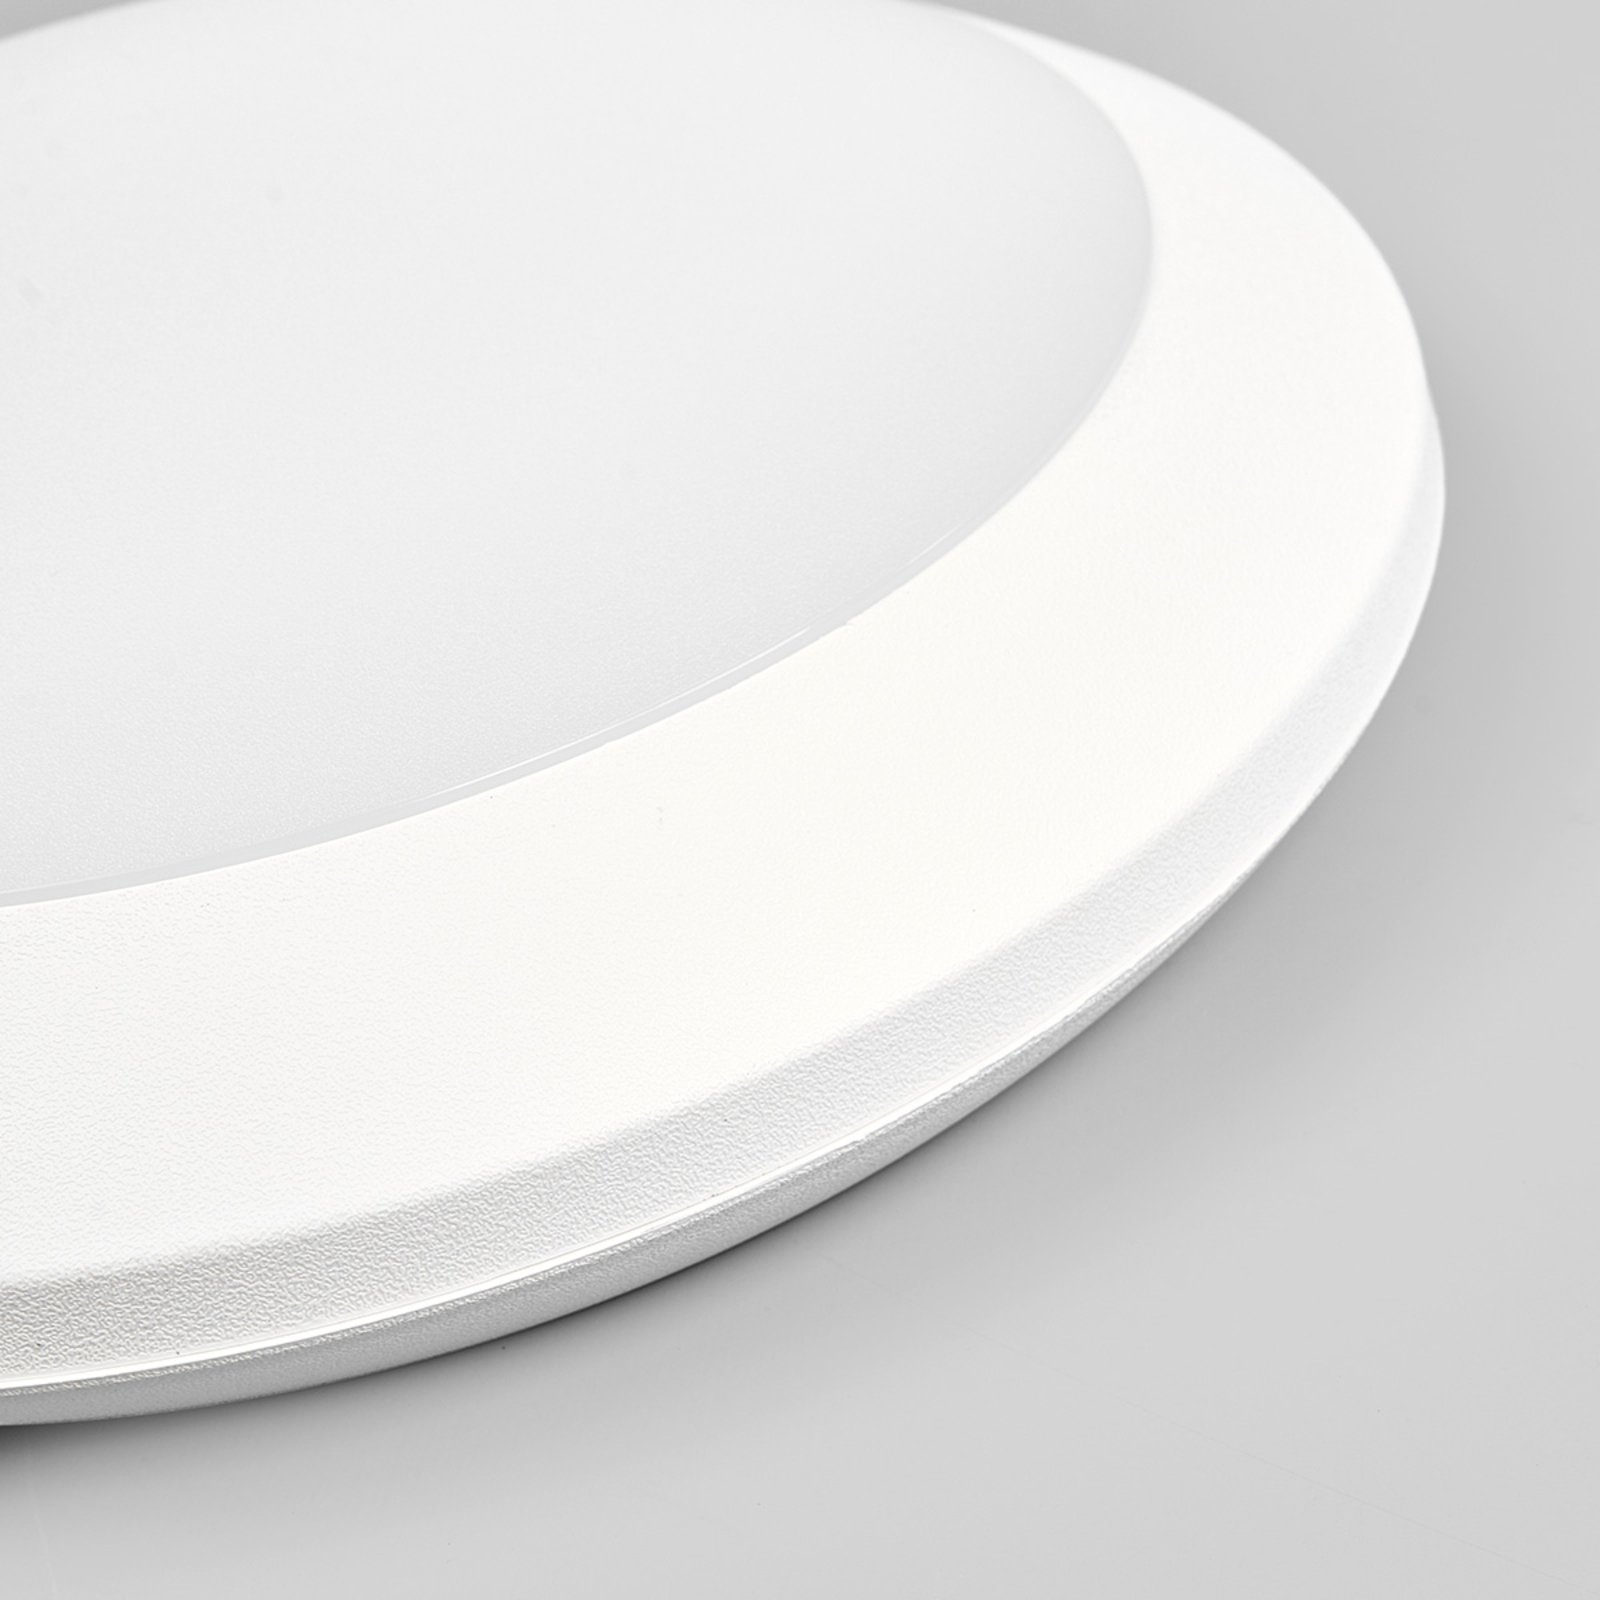 Senzorové stropné svietidlo Umberta 2xE27 biele